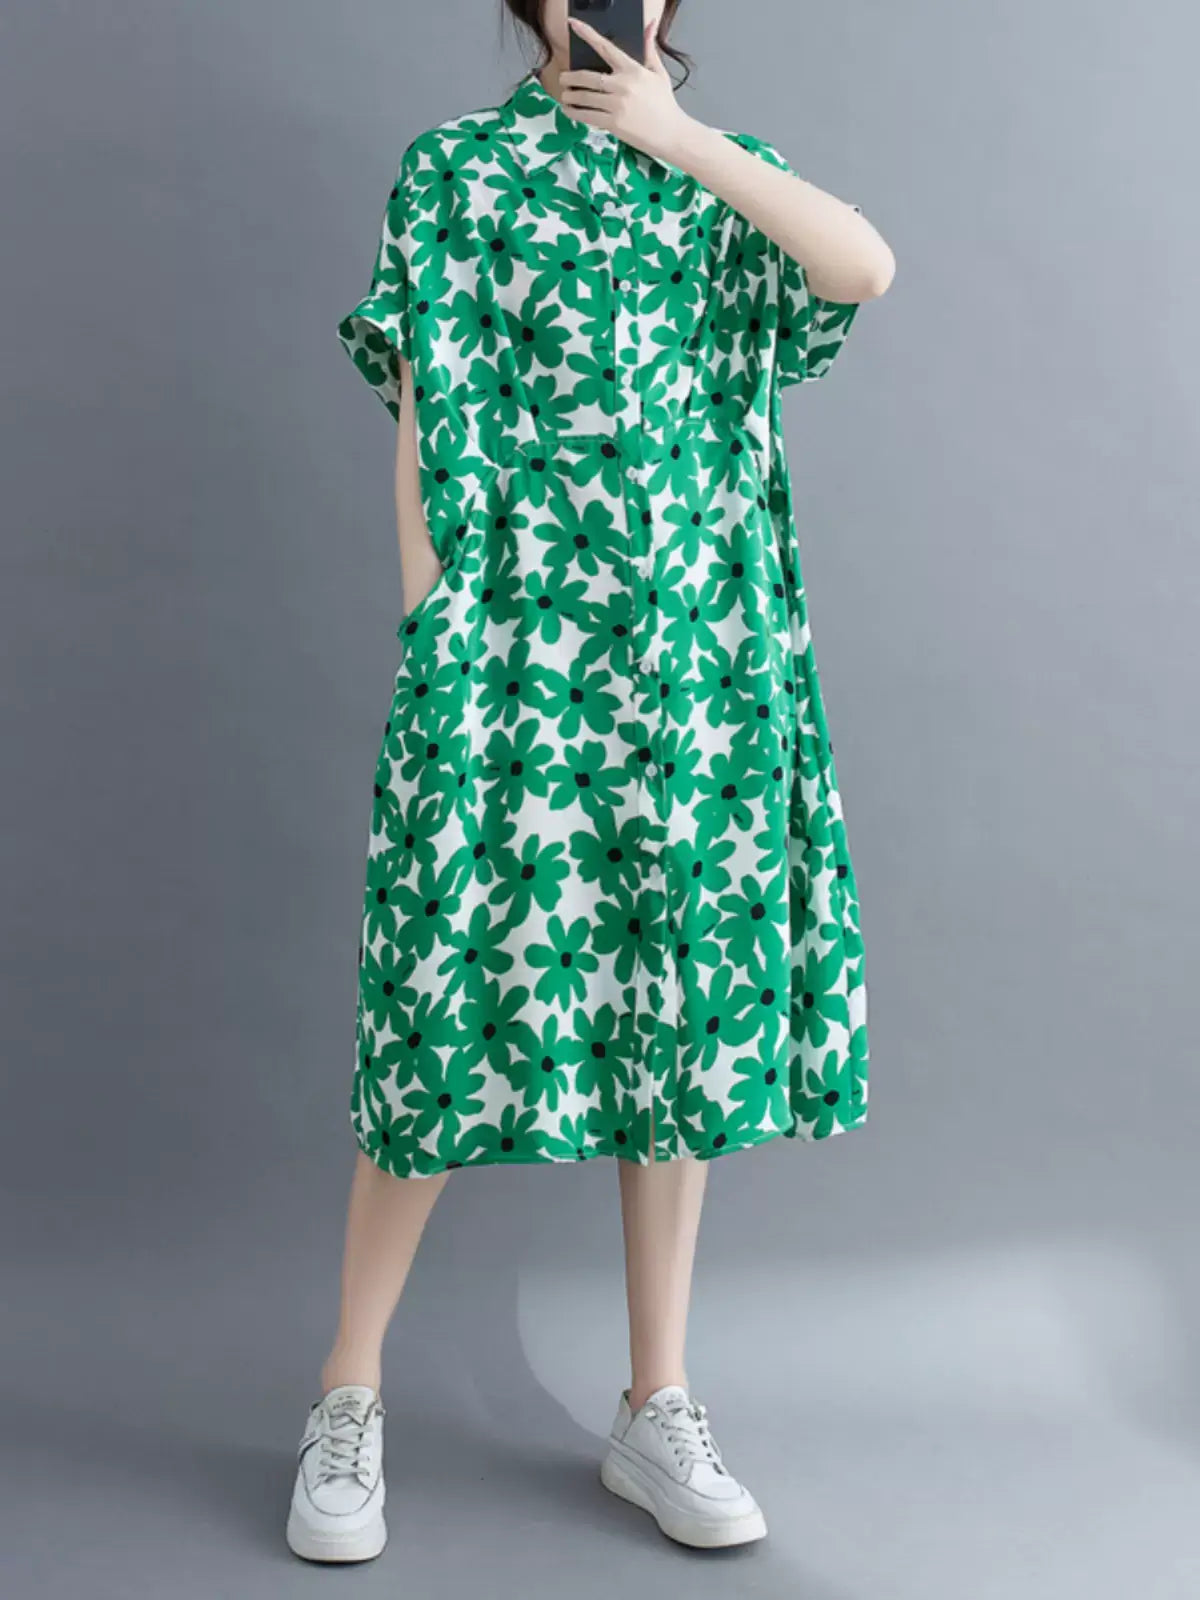 Babakud Women Vintage Charm Floral Pocket Shirt Midi Dress